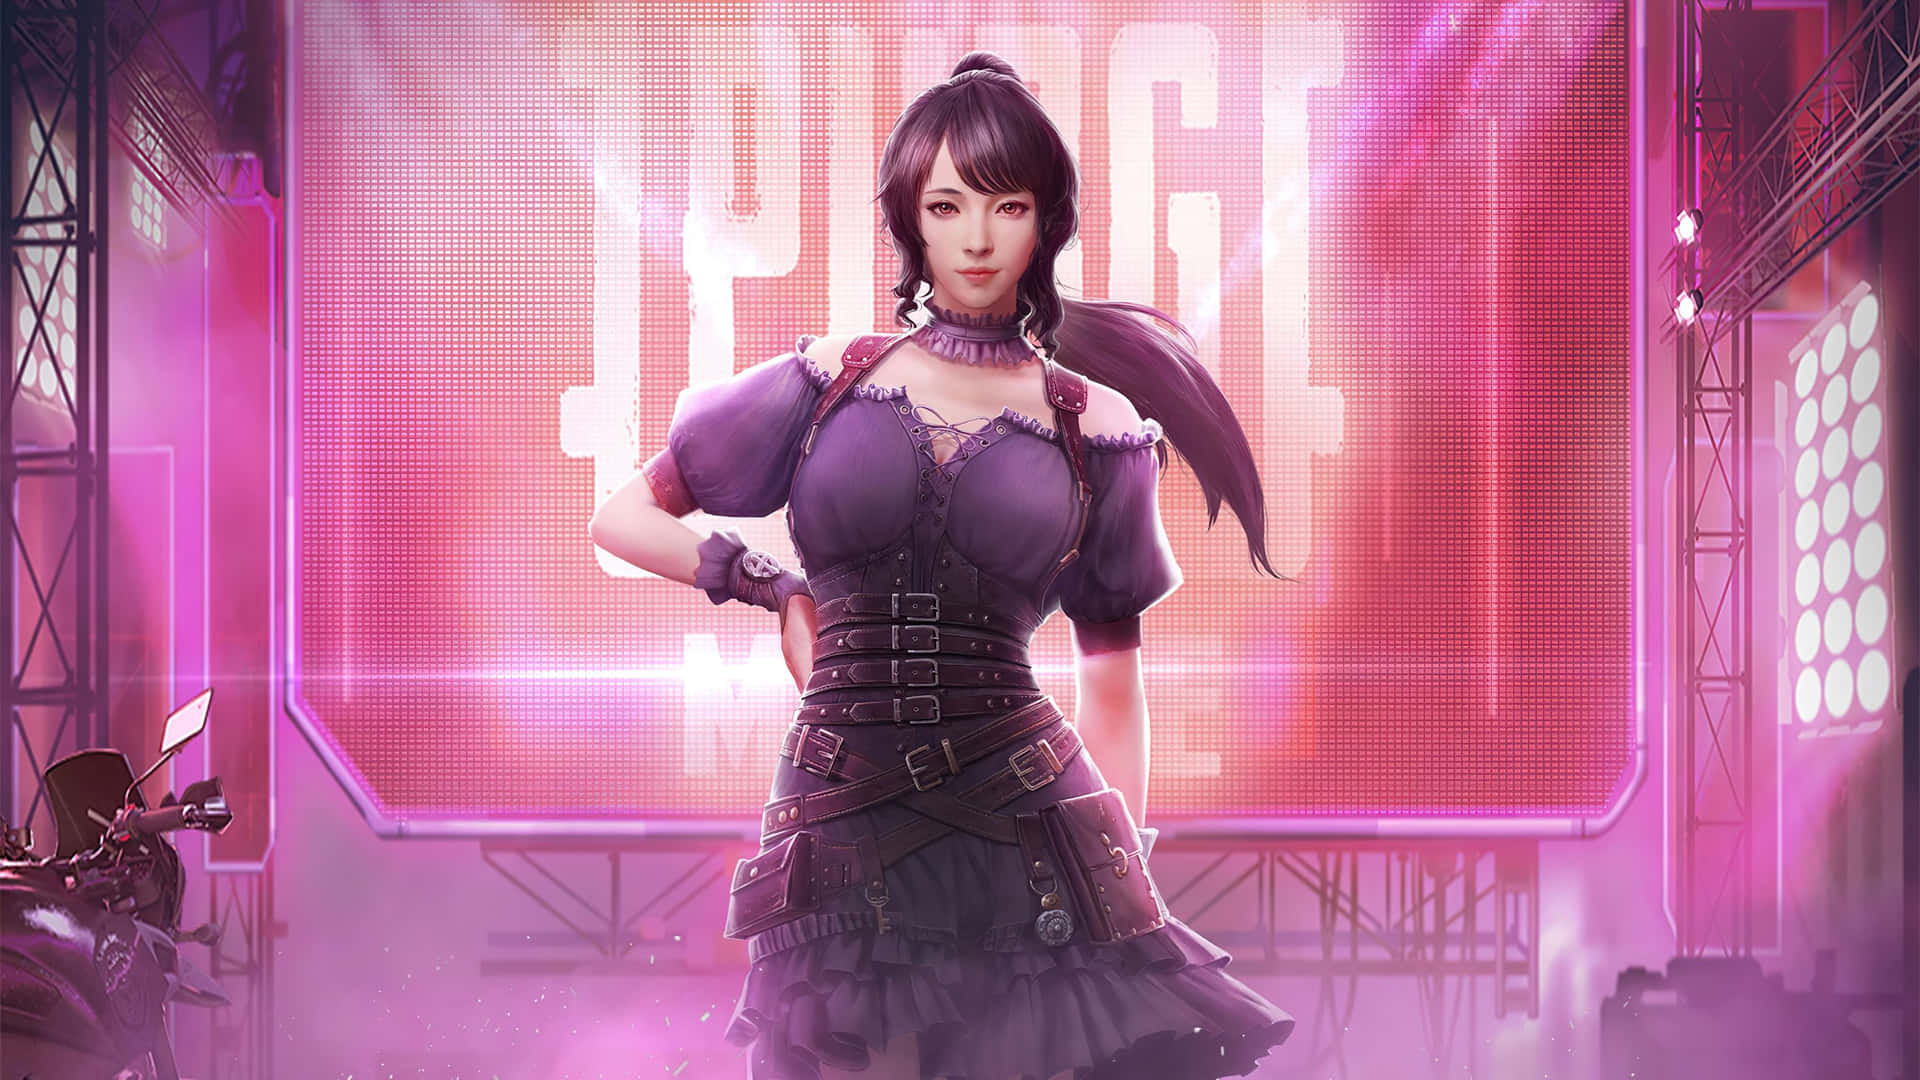 Caption: Fierce PUBG Gamer Girl with Purple Hair Wallpaper